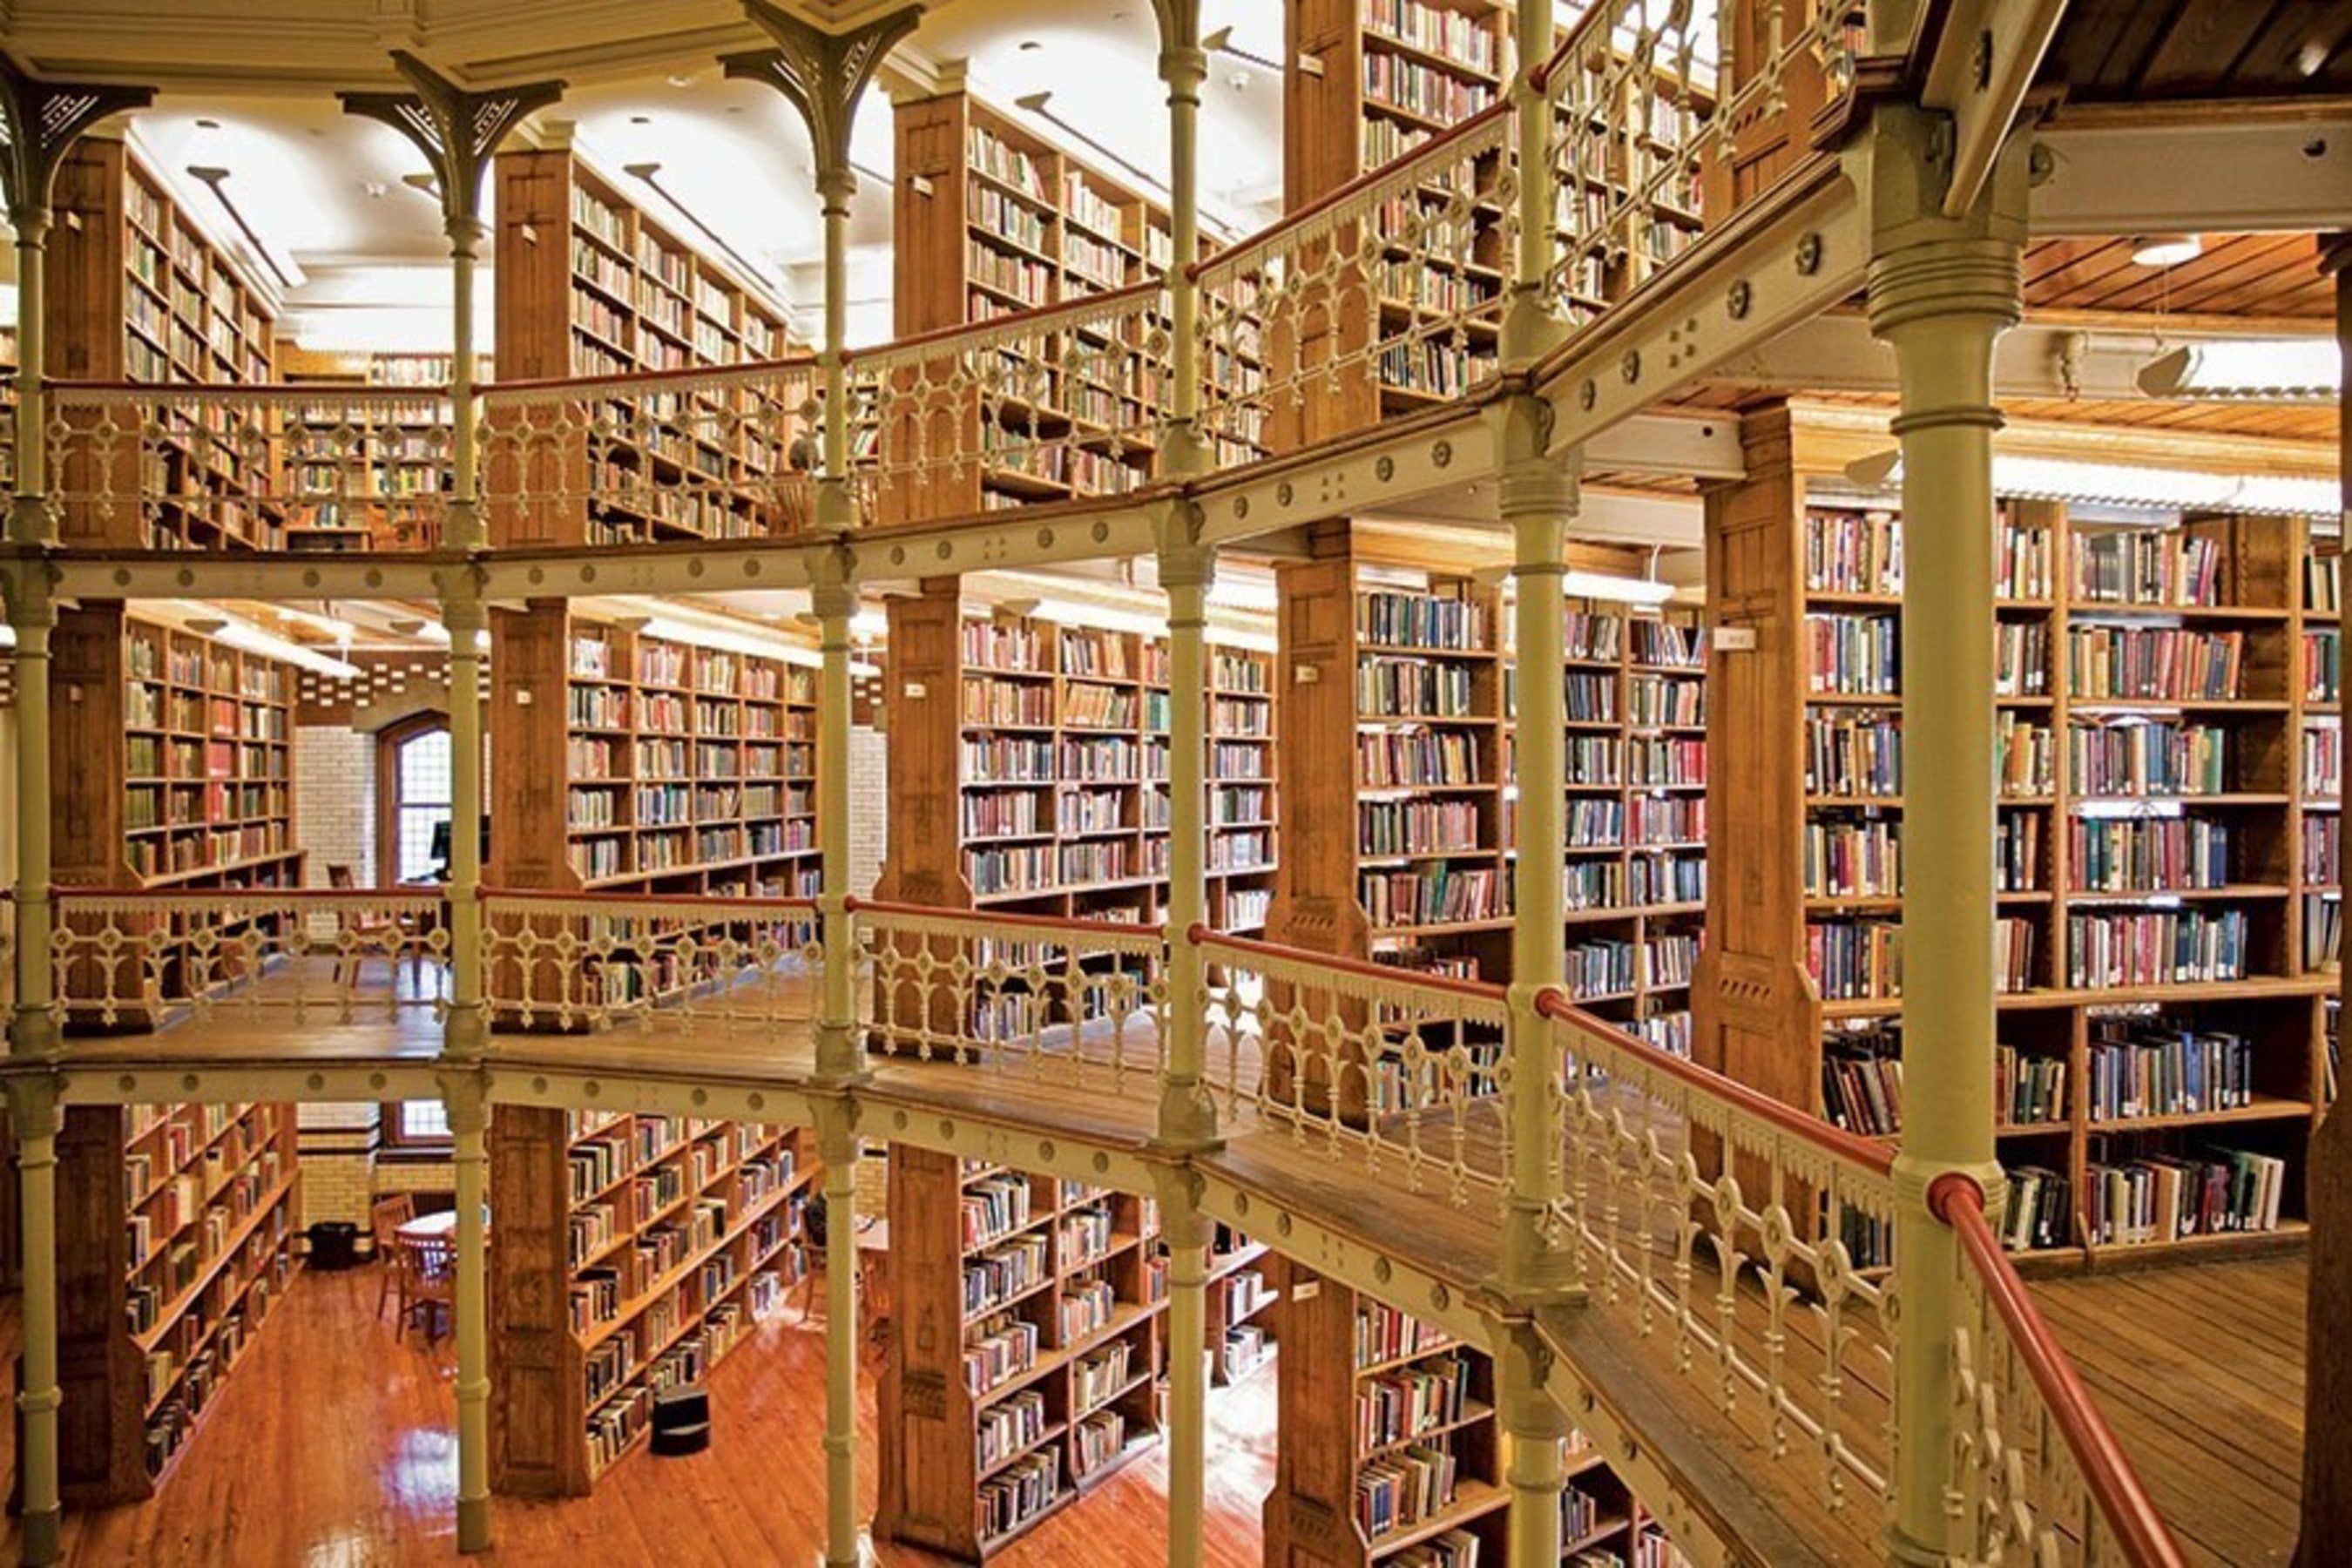 Library messages. Библиотека Чикагского университета. Пенсильванский университет библиотека. Библиотека университета Чикаго. Библиотека «the Angel Library» в Киото.